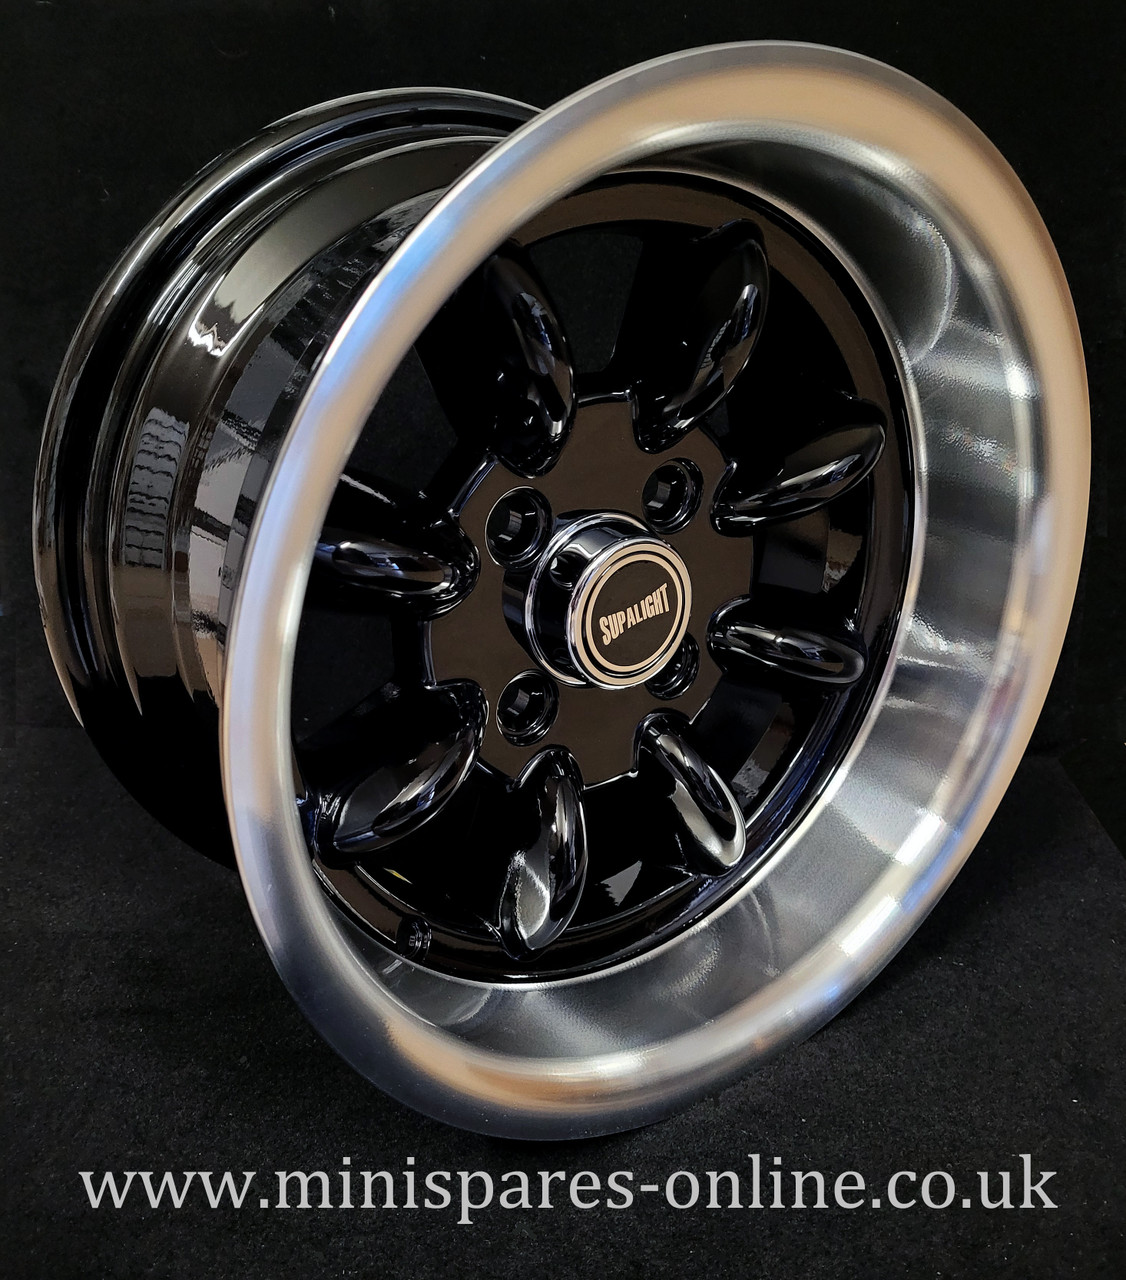 7x13 Black (Polished Rim) Superlight Softline Deep Dish Alloy Wheel Rim or Package for Classic Mini